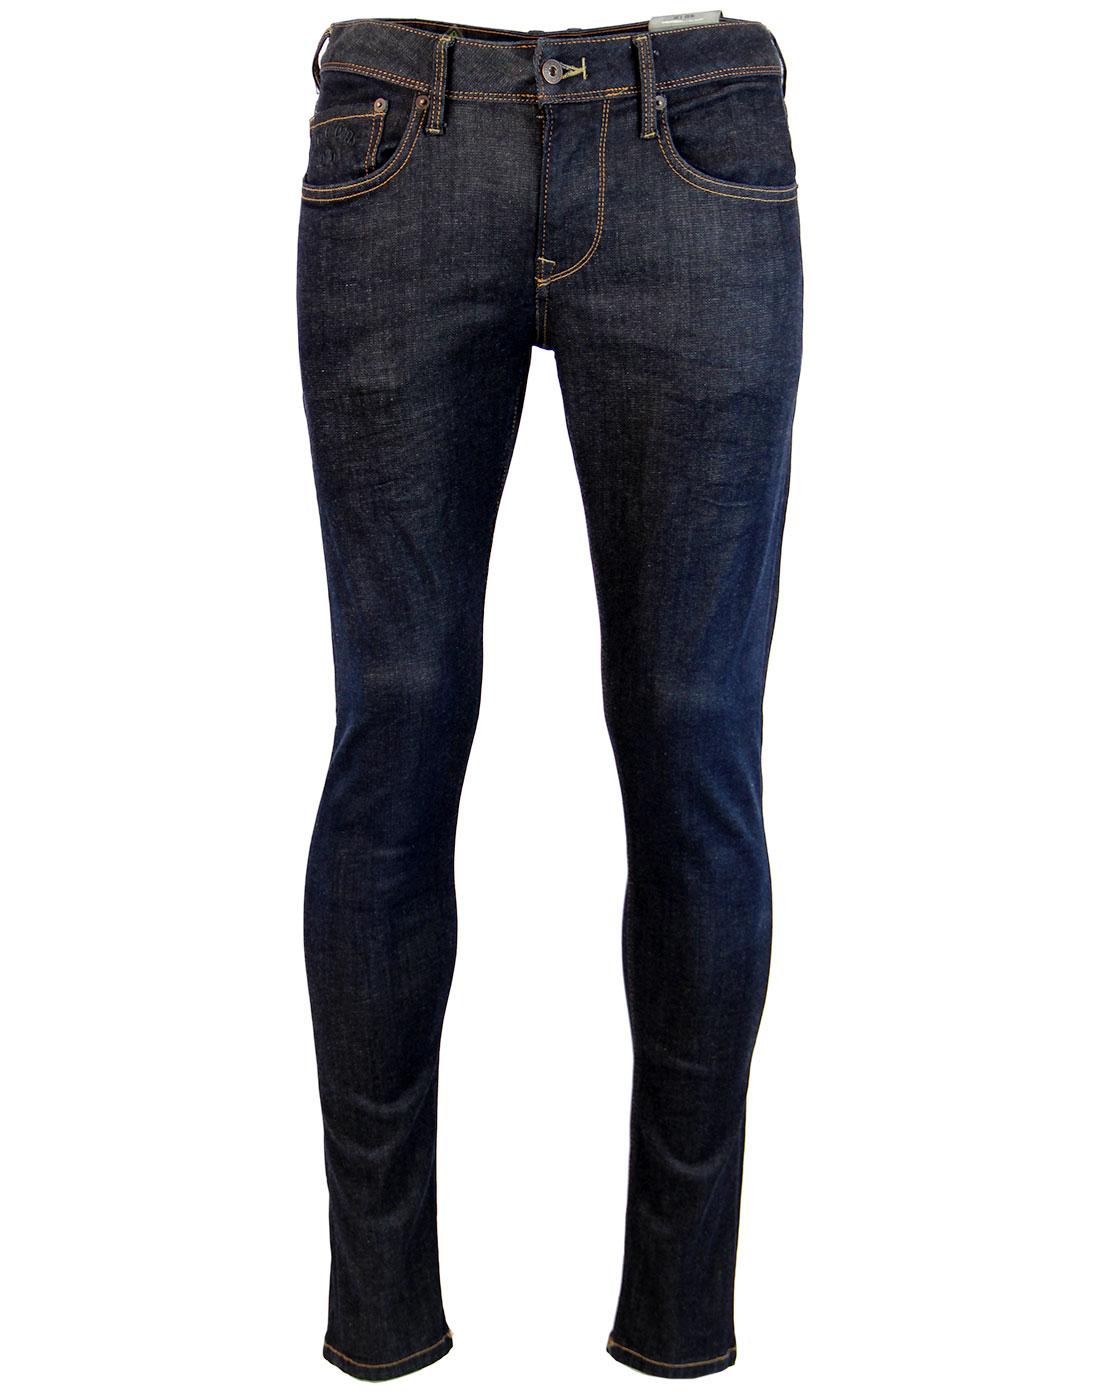 jeans finsbury skinny fit low waist